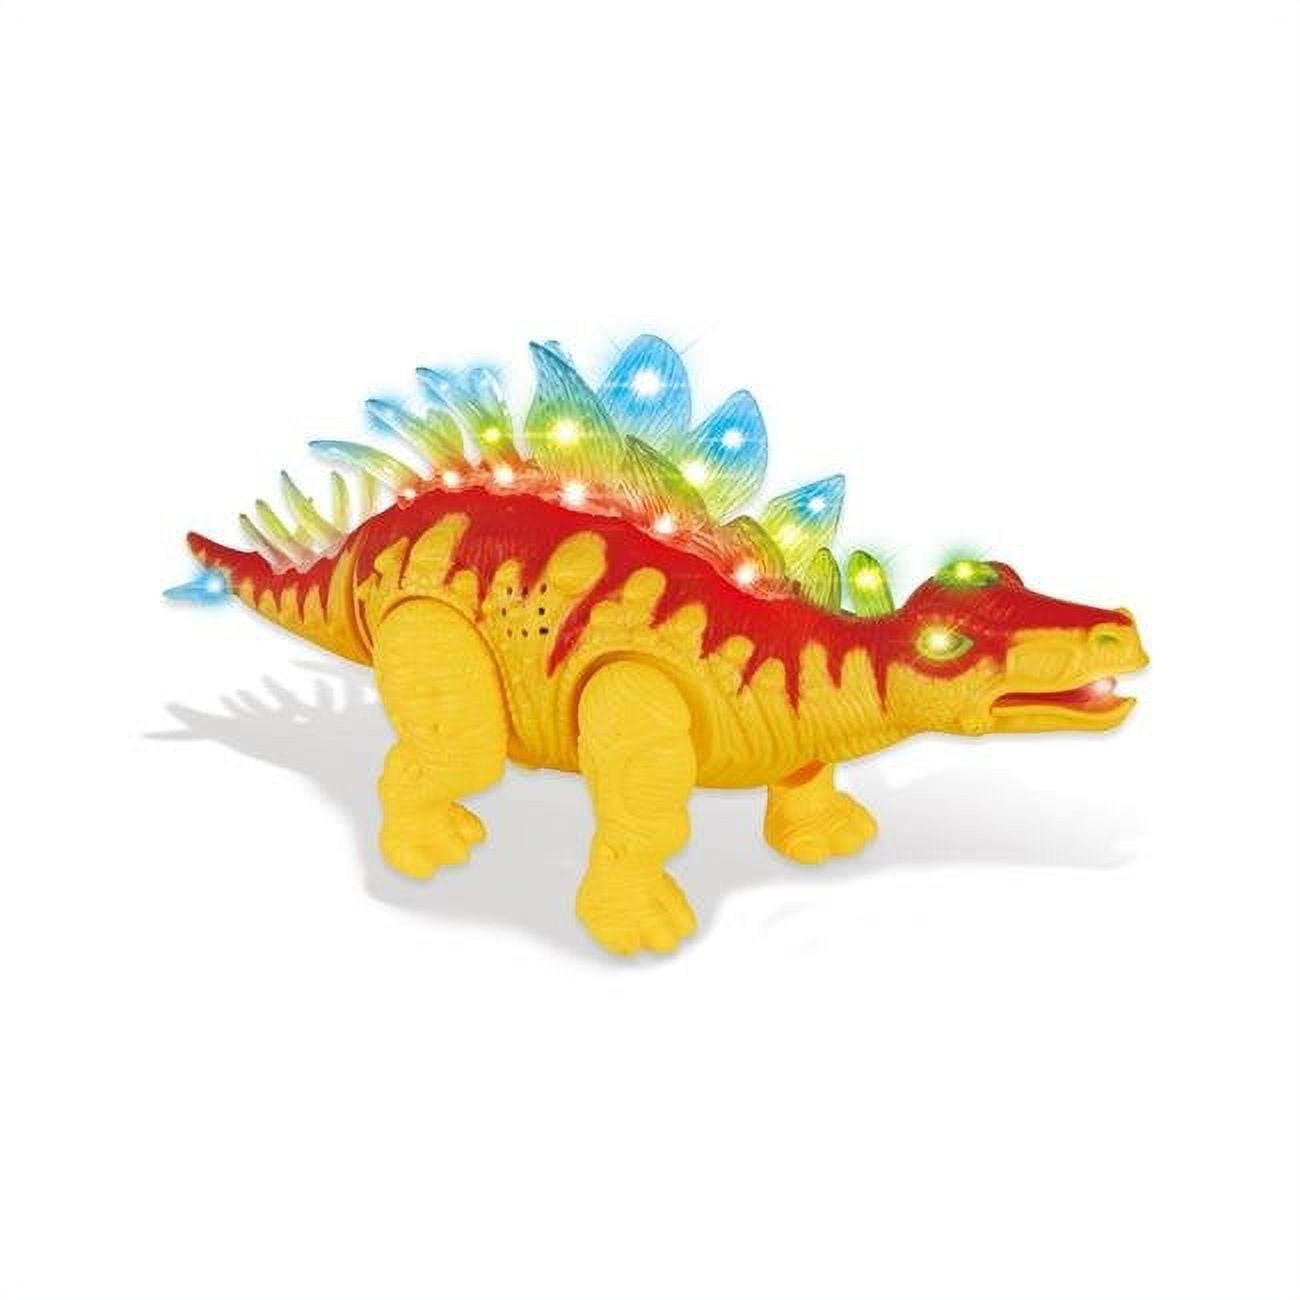 D638 Orange Walking Stegosaurus With Flashing & Sounds Dinosaur Toys For Kids - Orange